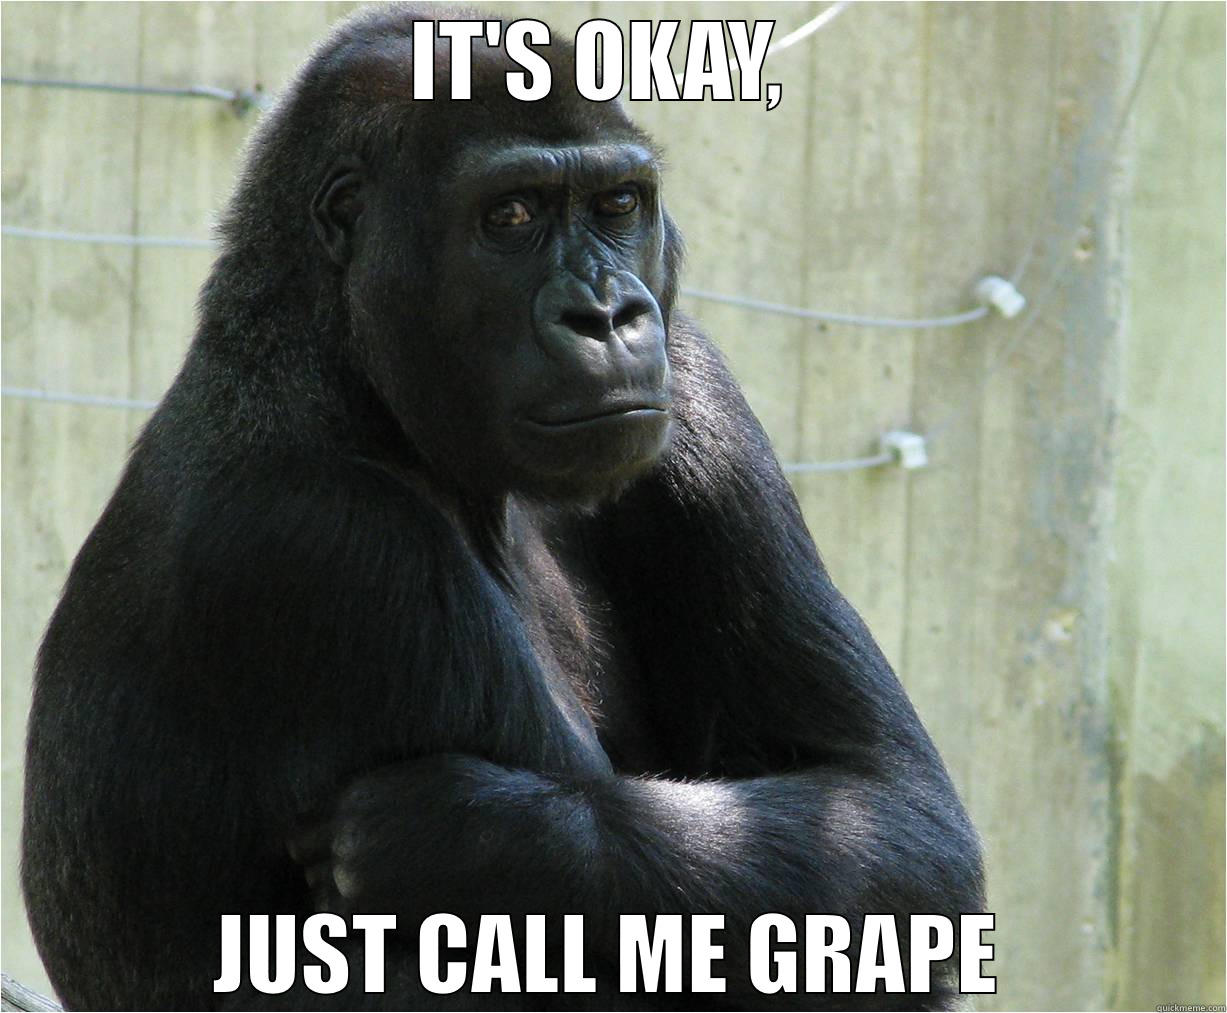 Grape, the great ape. - IT'S OKAY,  JUST CALL ME GRAPE Misc